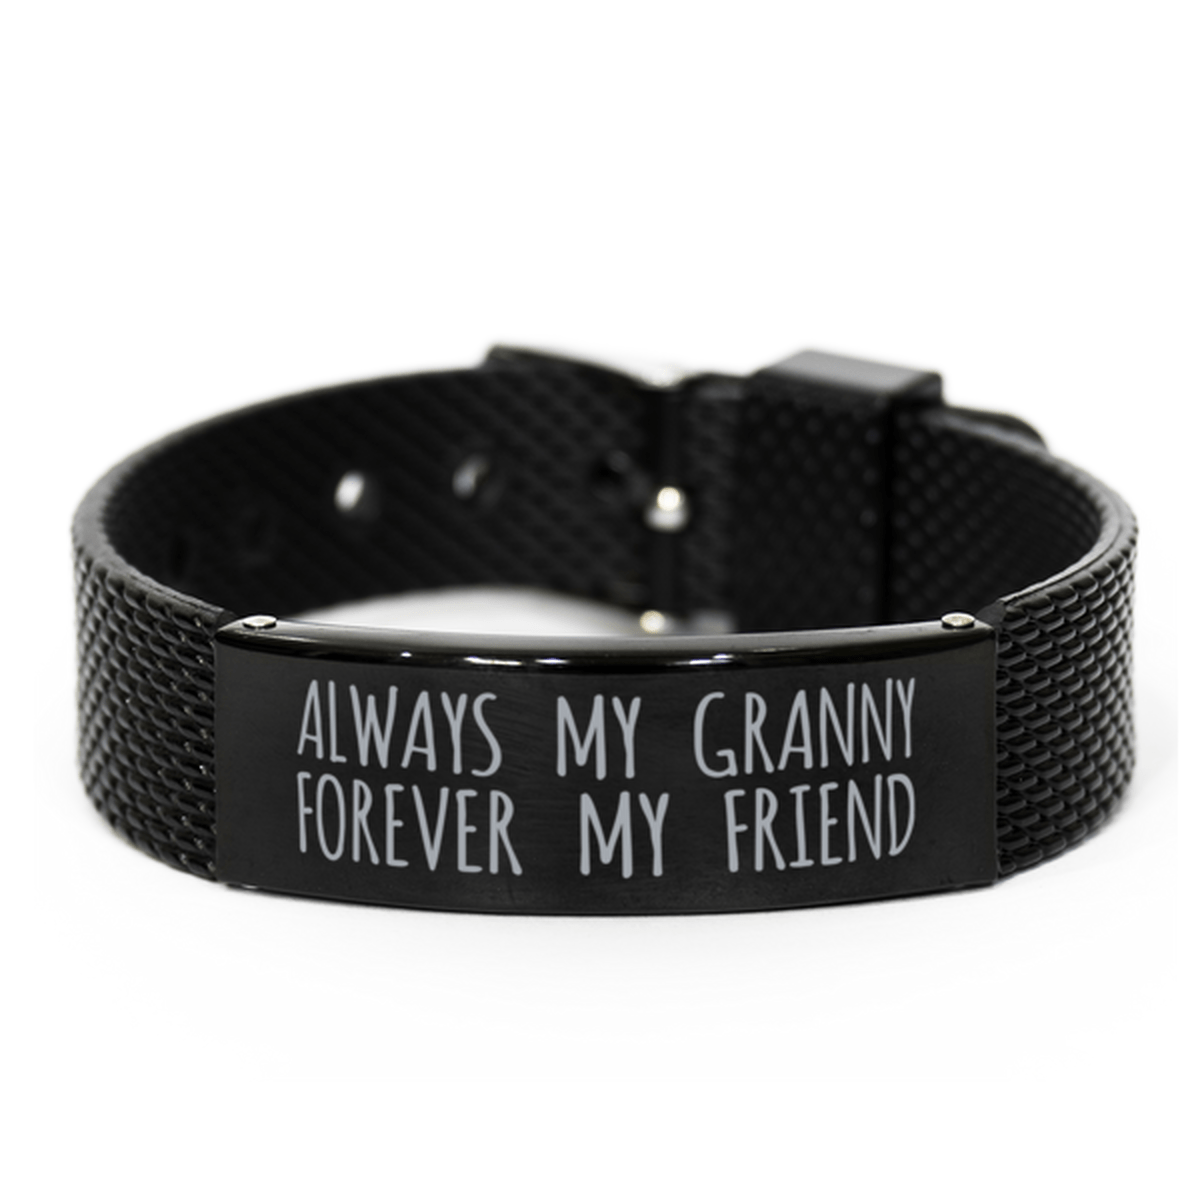 Inspirational Granny Black Shark Mesh Bracelet, Always My Granny Forever My Friend, Best Birthday Gifts for Family Friends